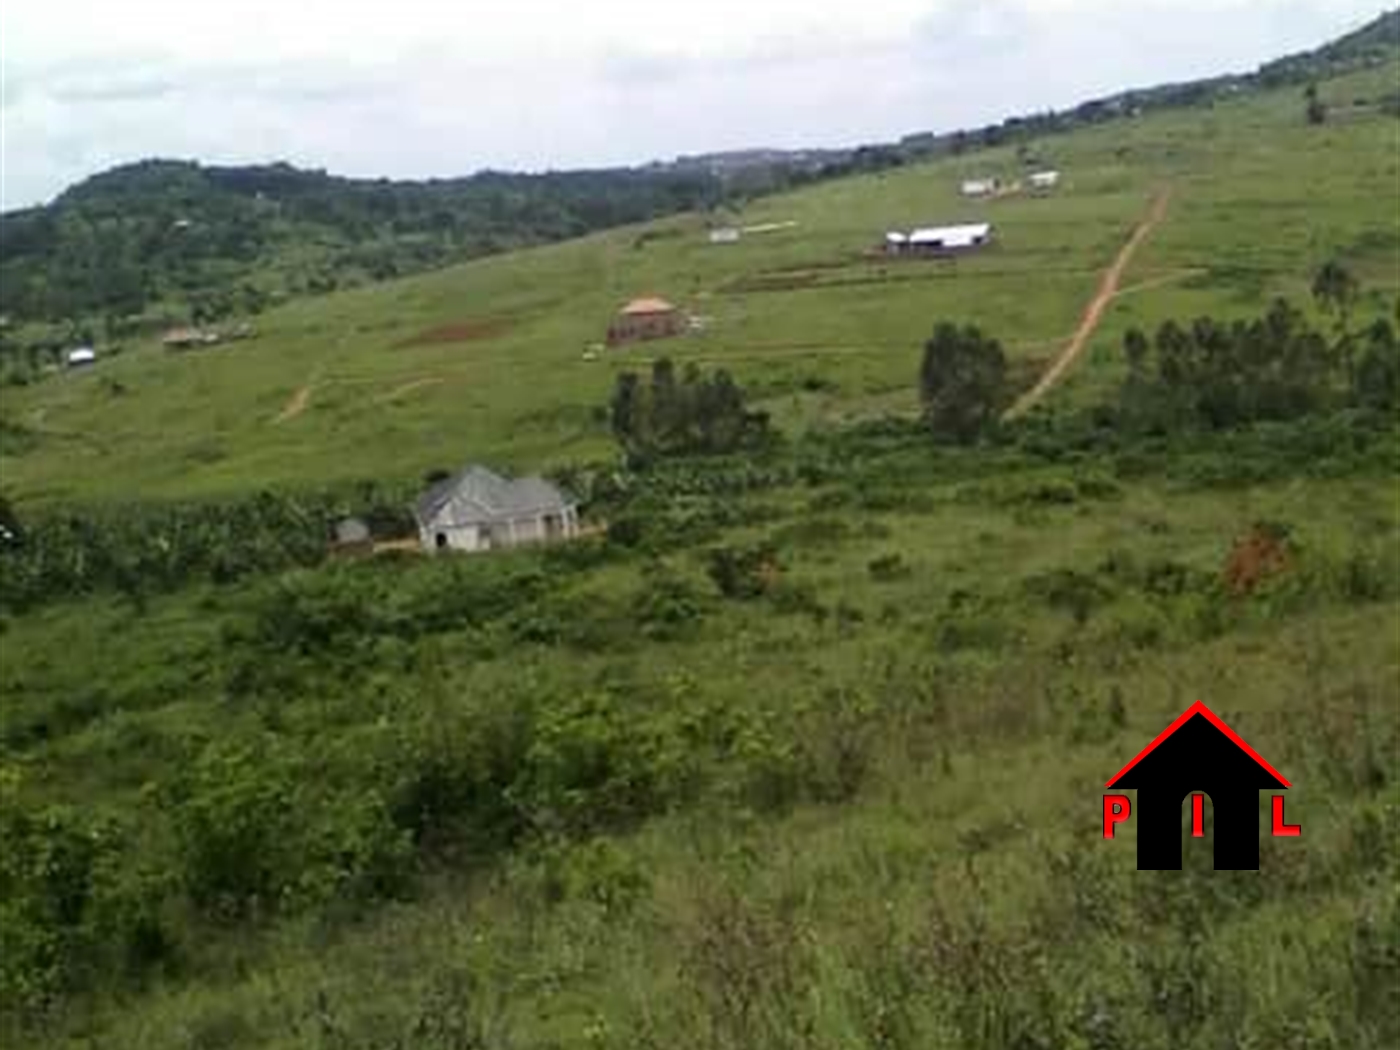 Agricultural Land for sale in Mijumwa Nakaseke